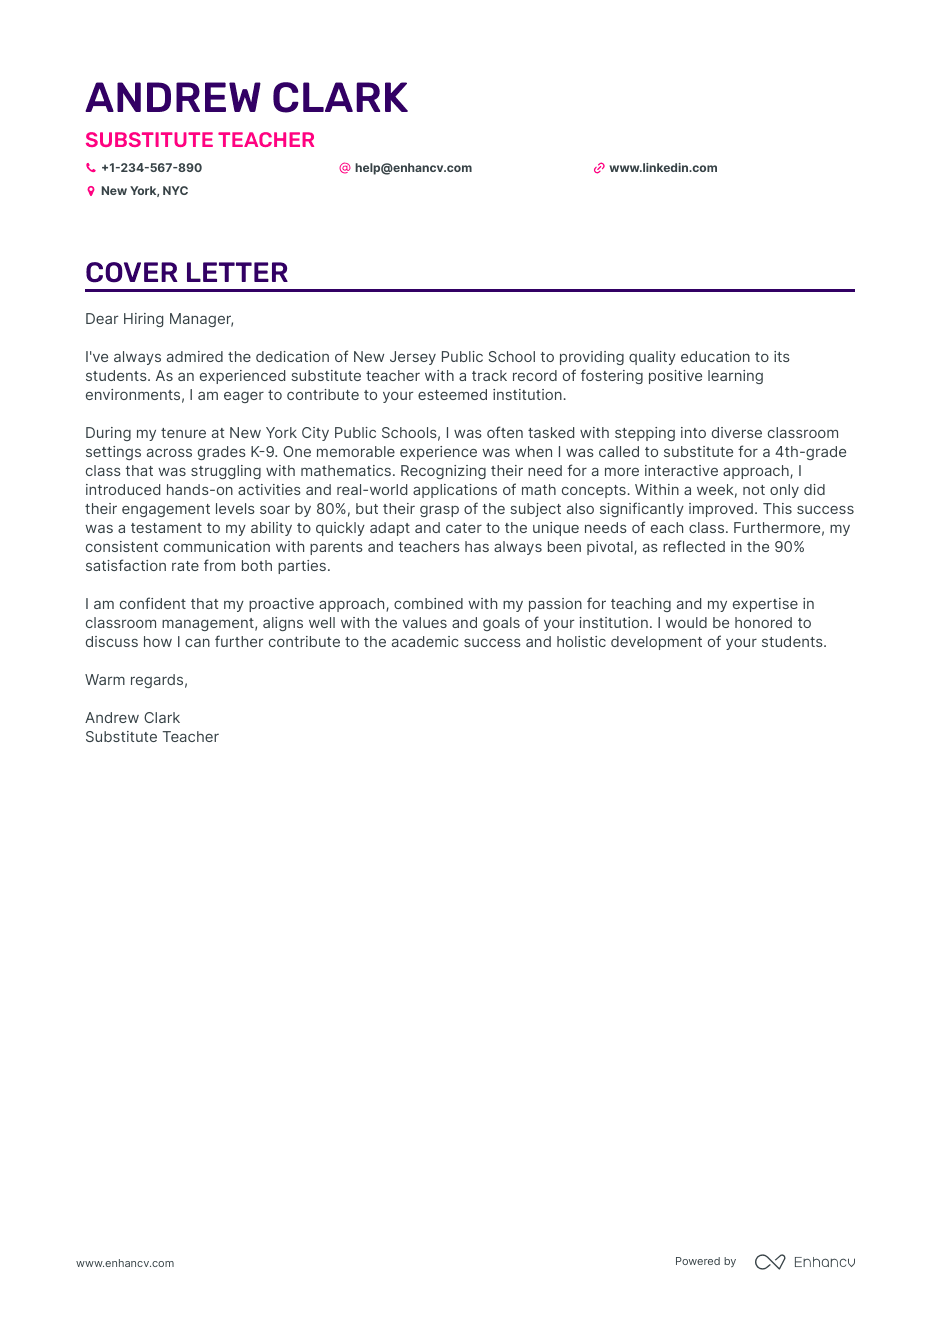 Substitute teacher cover letter example